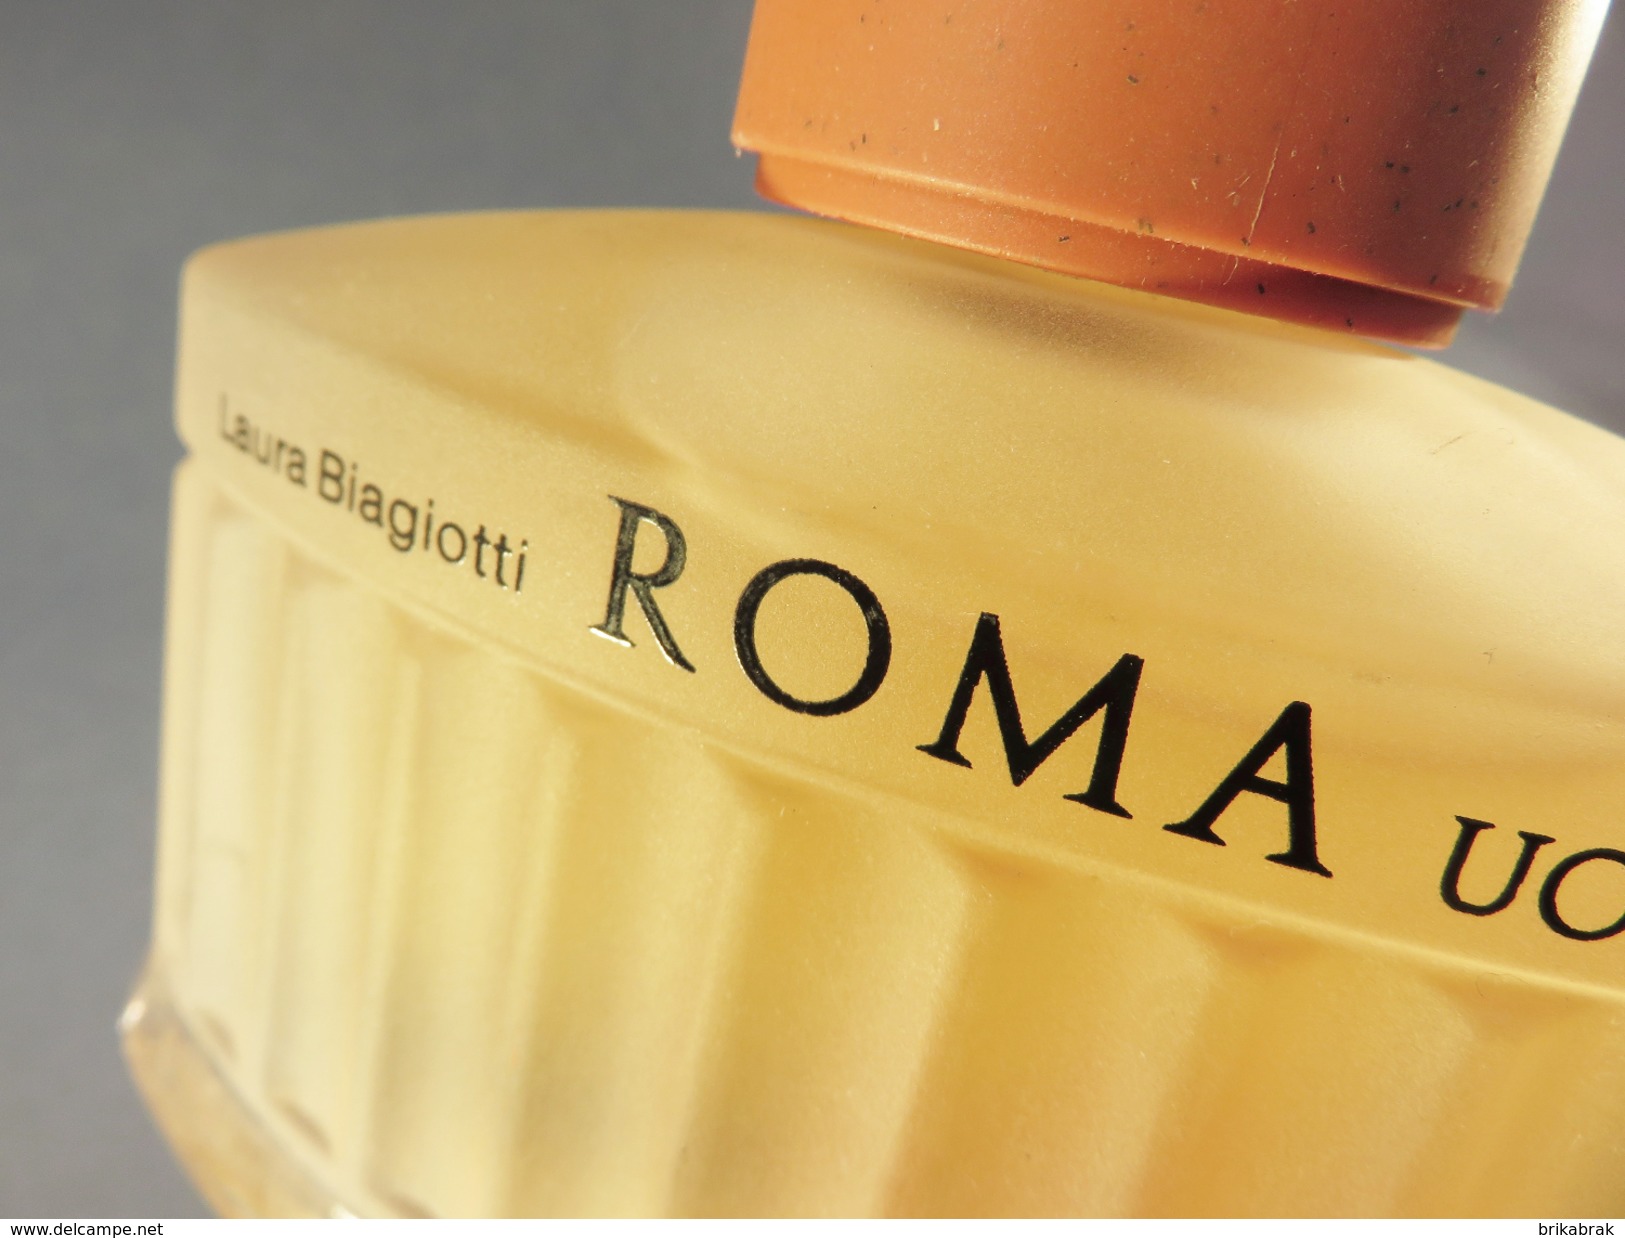 FLACON FACTICE ROMA LAURA BIAGOTTI + Mode Flacon Bouteille Rome PLV Parfum Parfumerie - Factices